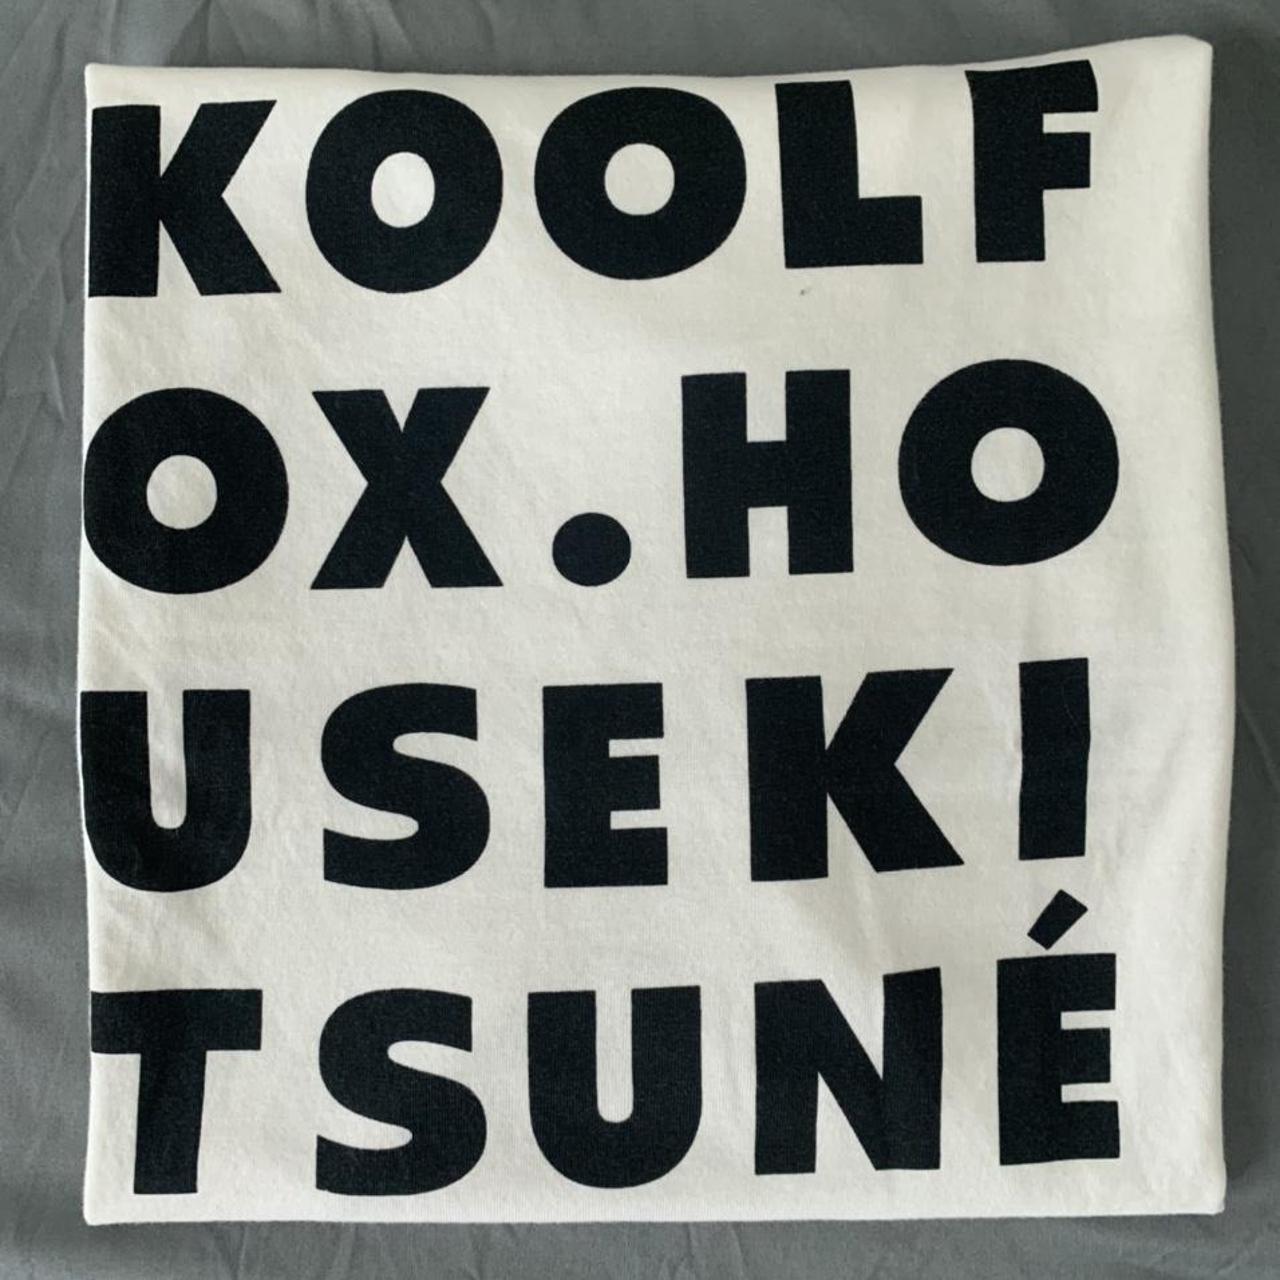 Product Image 2 - MAISON KITSUNE
Kool Fox T-Shirt
#luxury #desinger